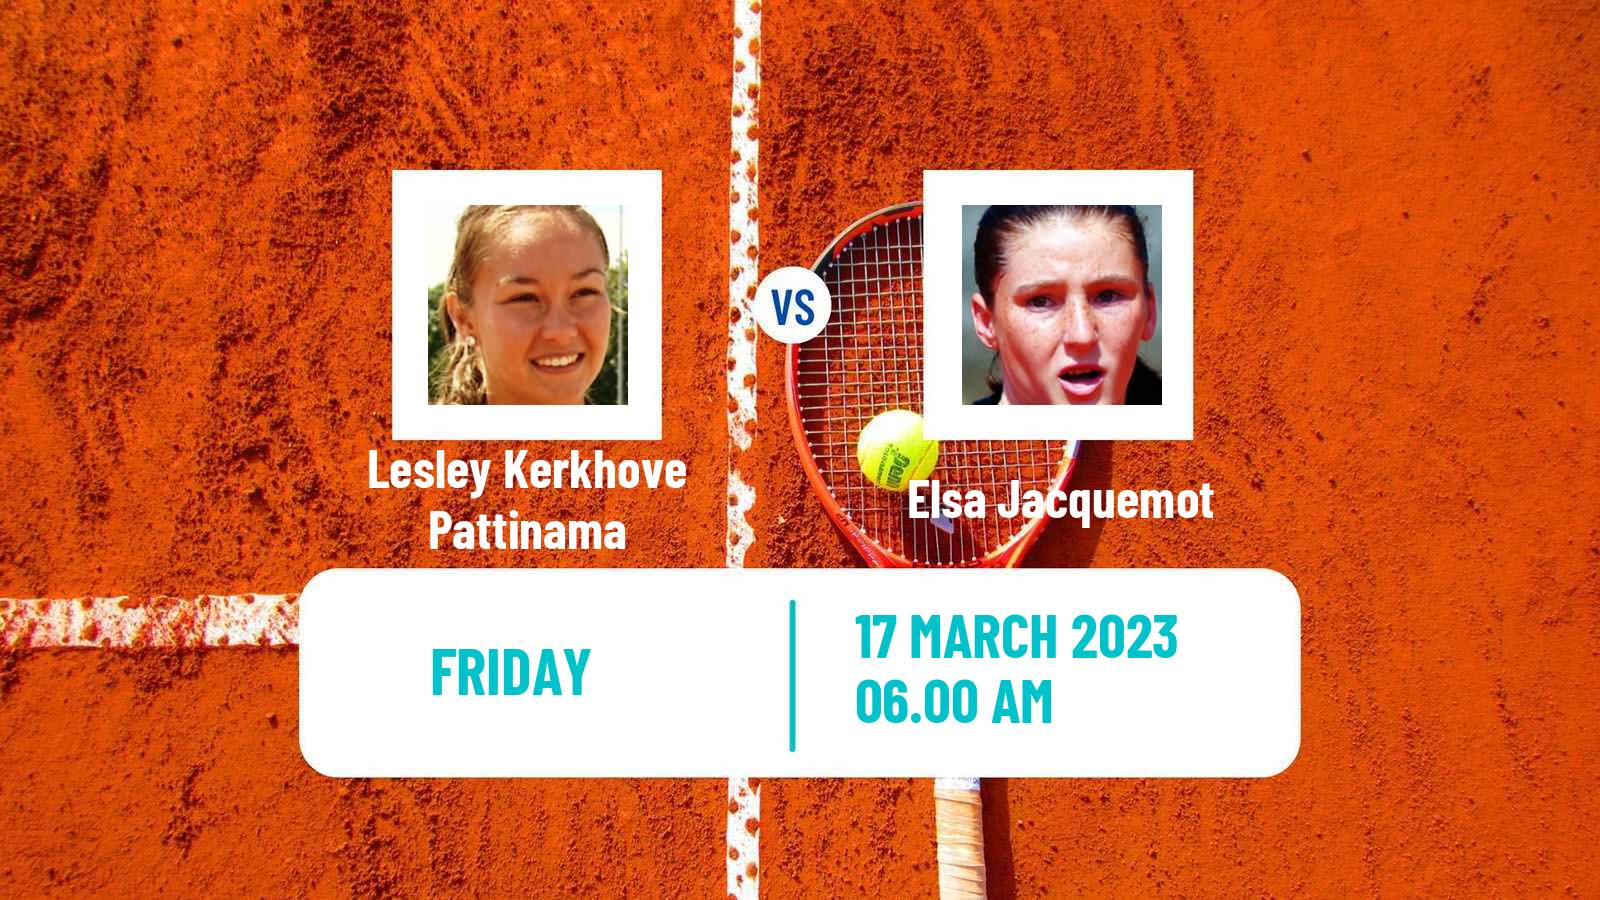 Tennis ITF Tournaments Lesley Kerkhove Pattinama - Elsa Jacquemot